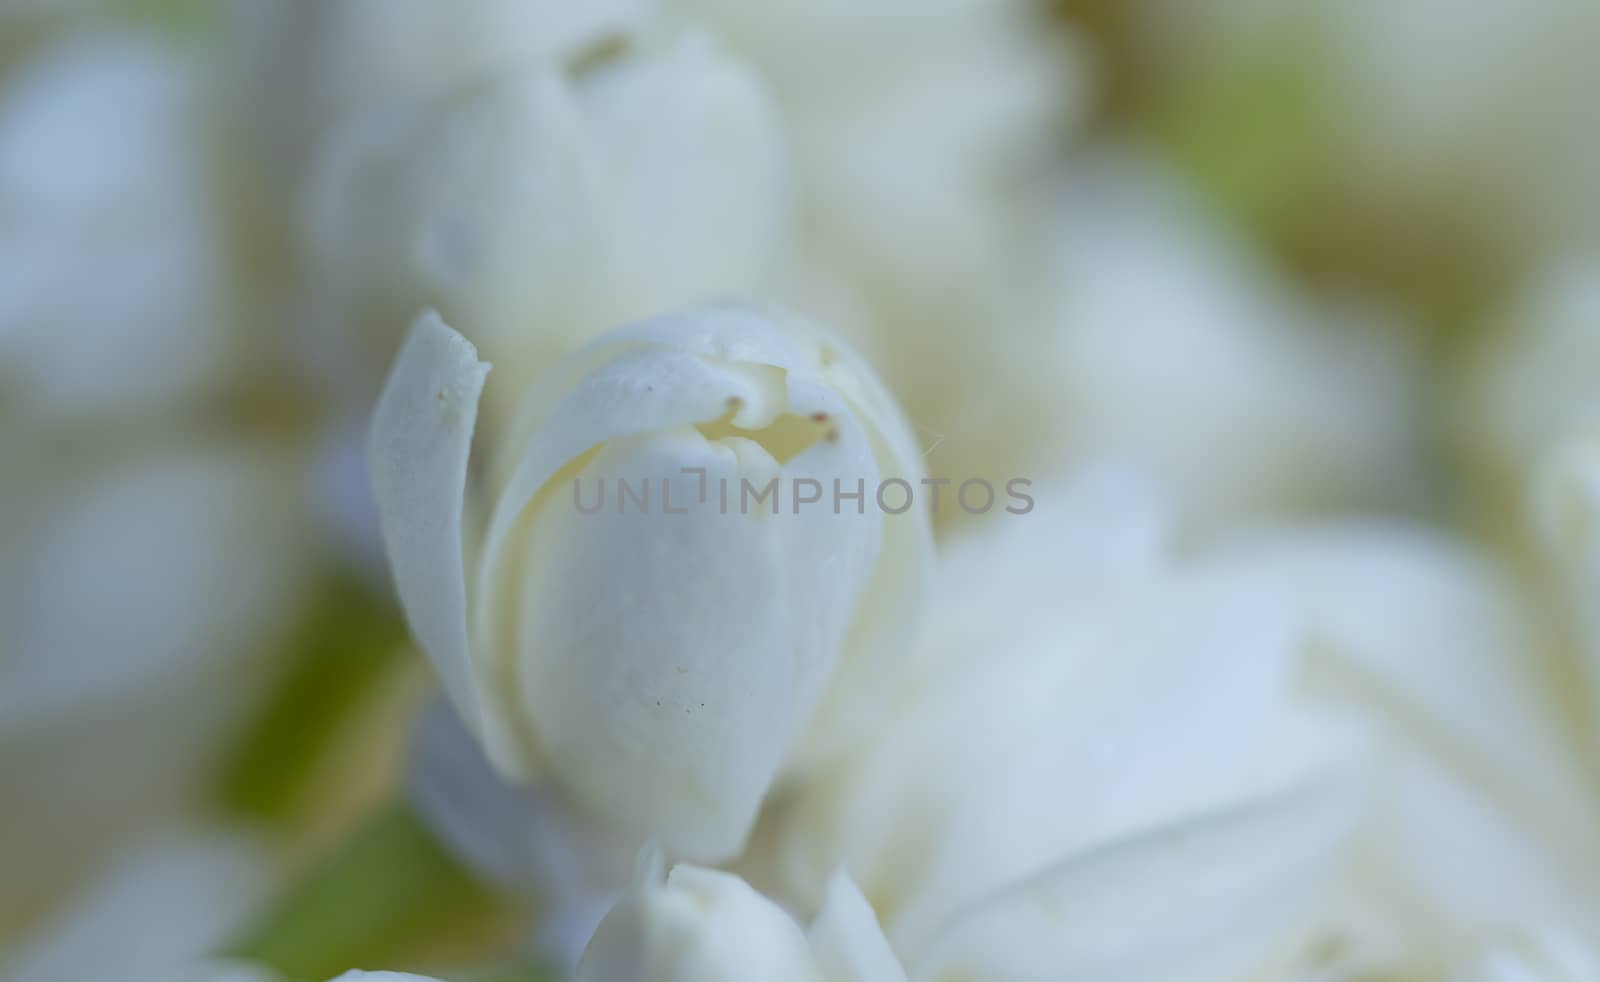 outdoors flower background of white jasmine flower